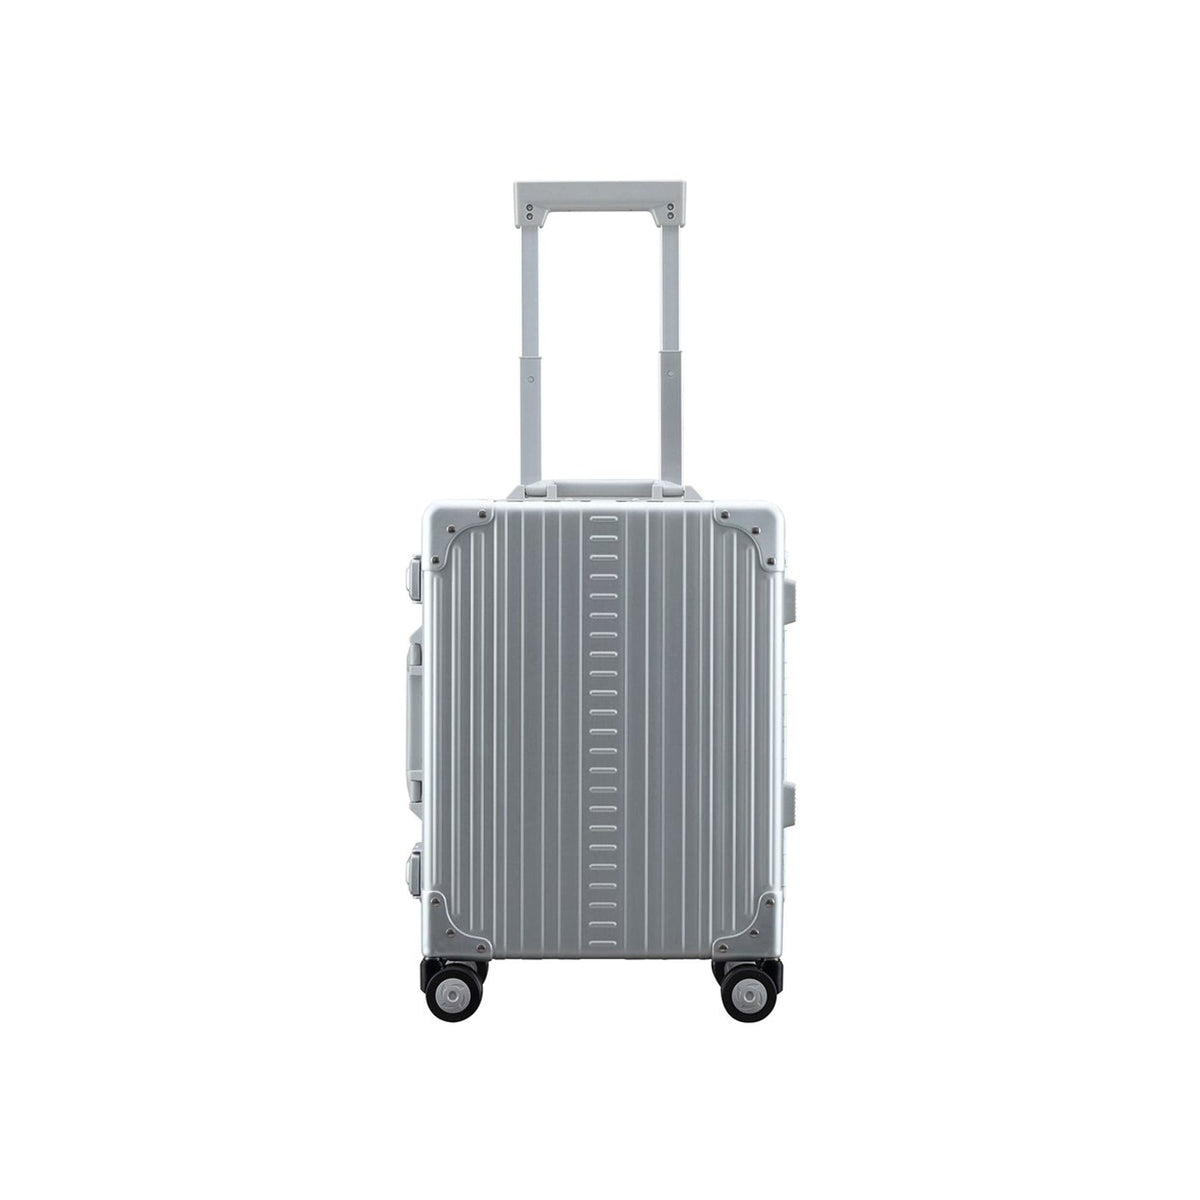 Aleon International 19" Carry-On Luggage